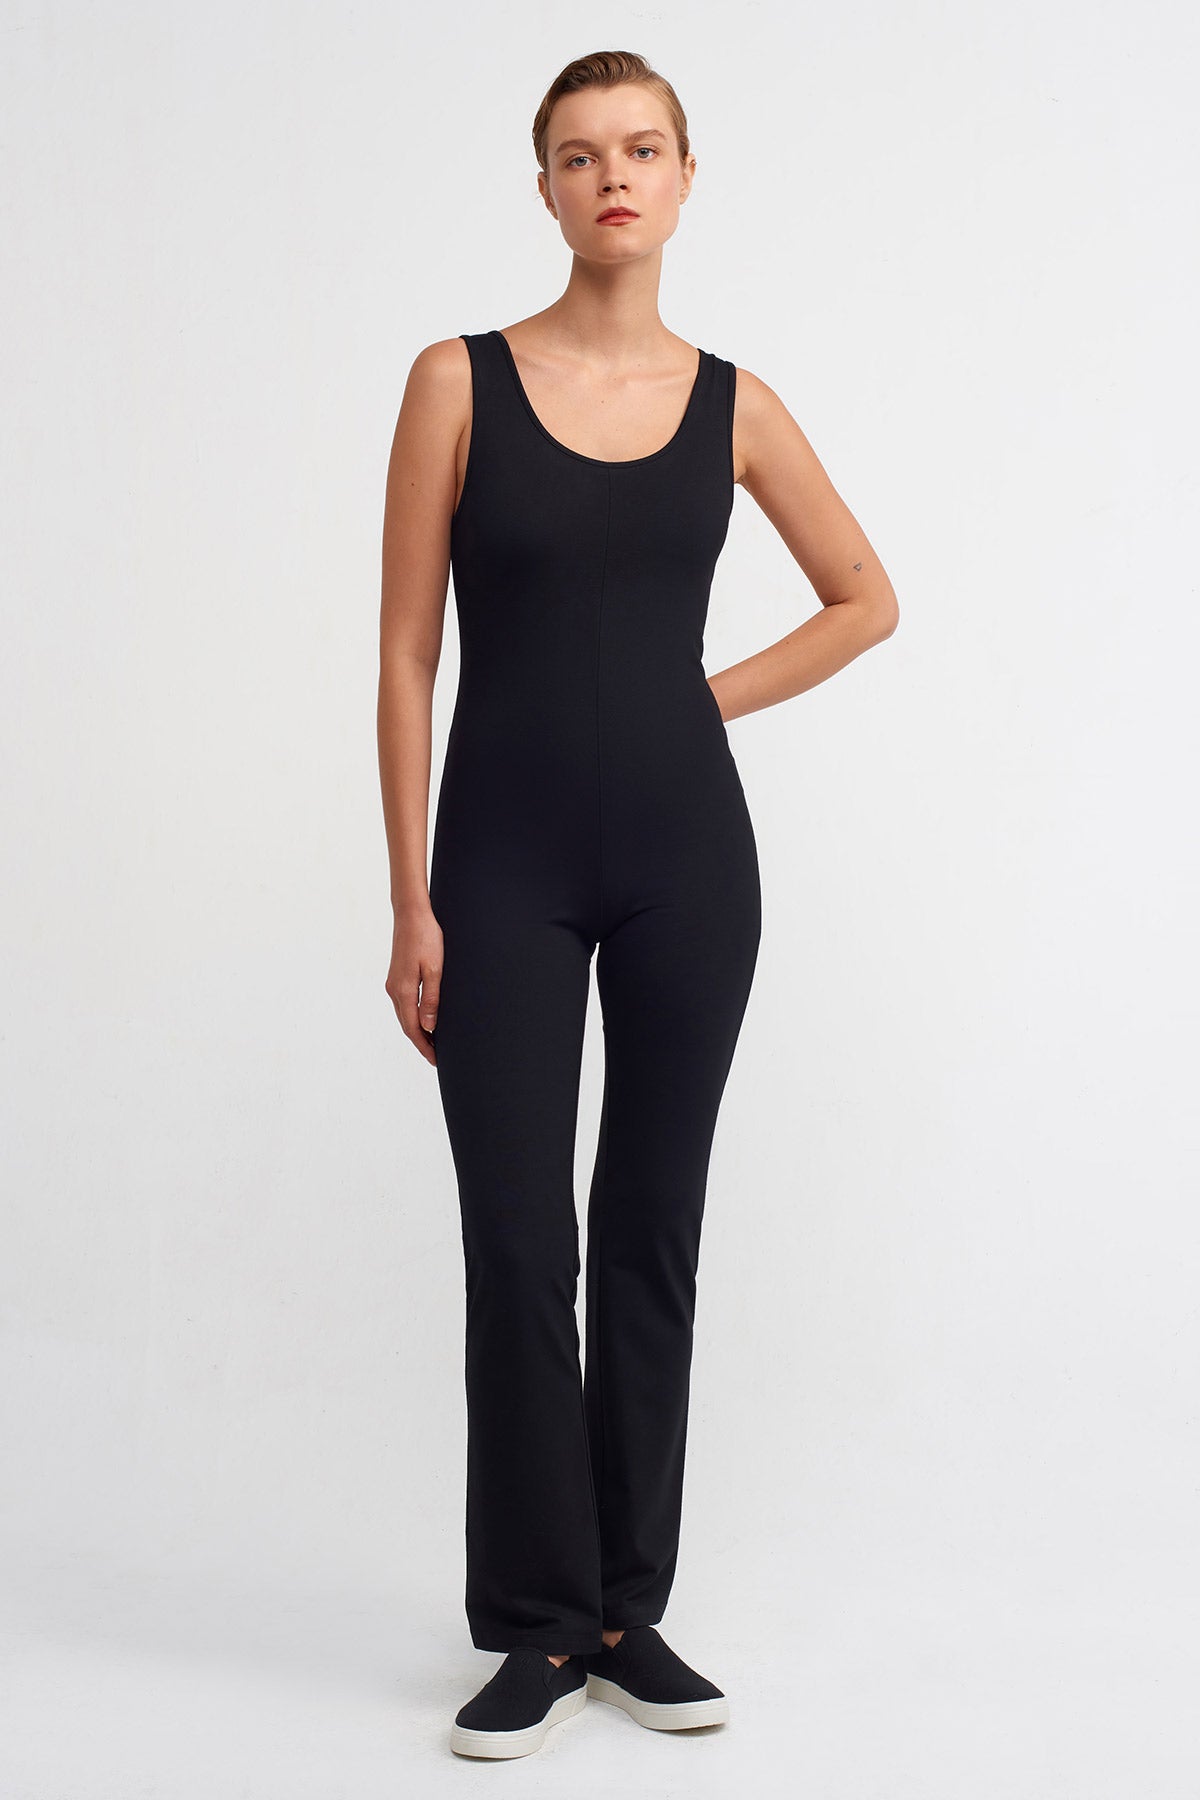 Naked Wardrobe sleeveless vinyl jumpsuit in black, £120.00